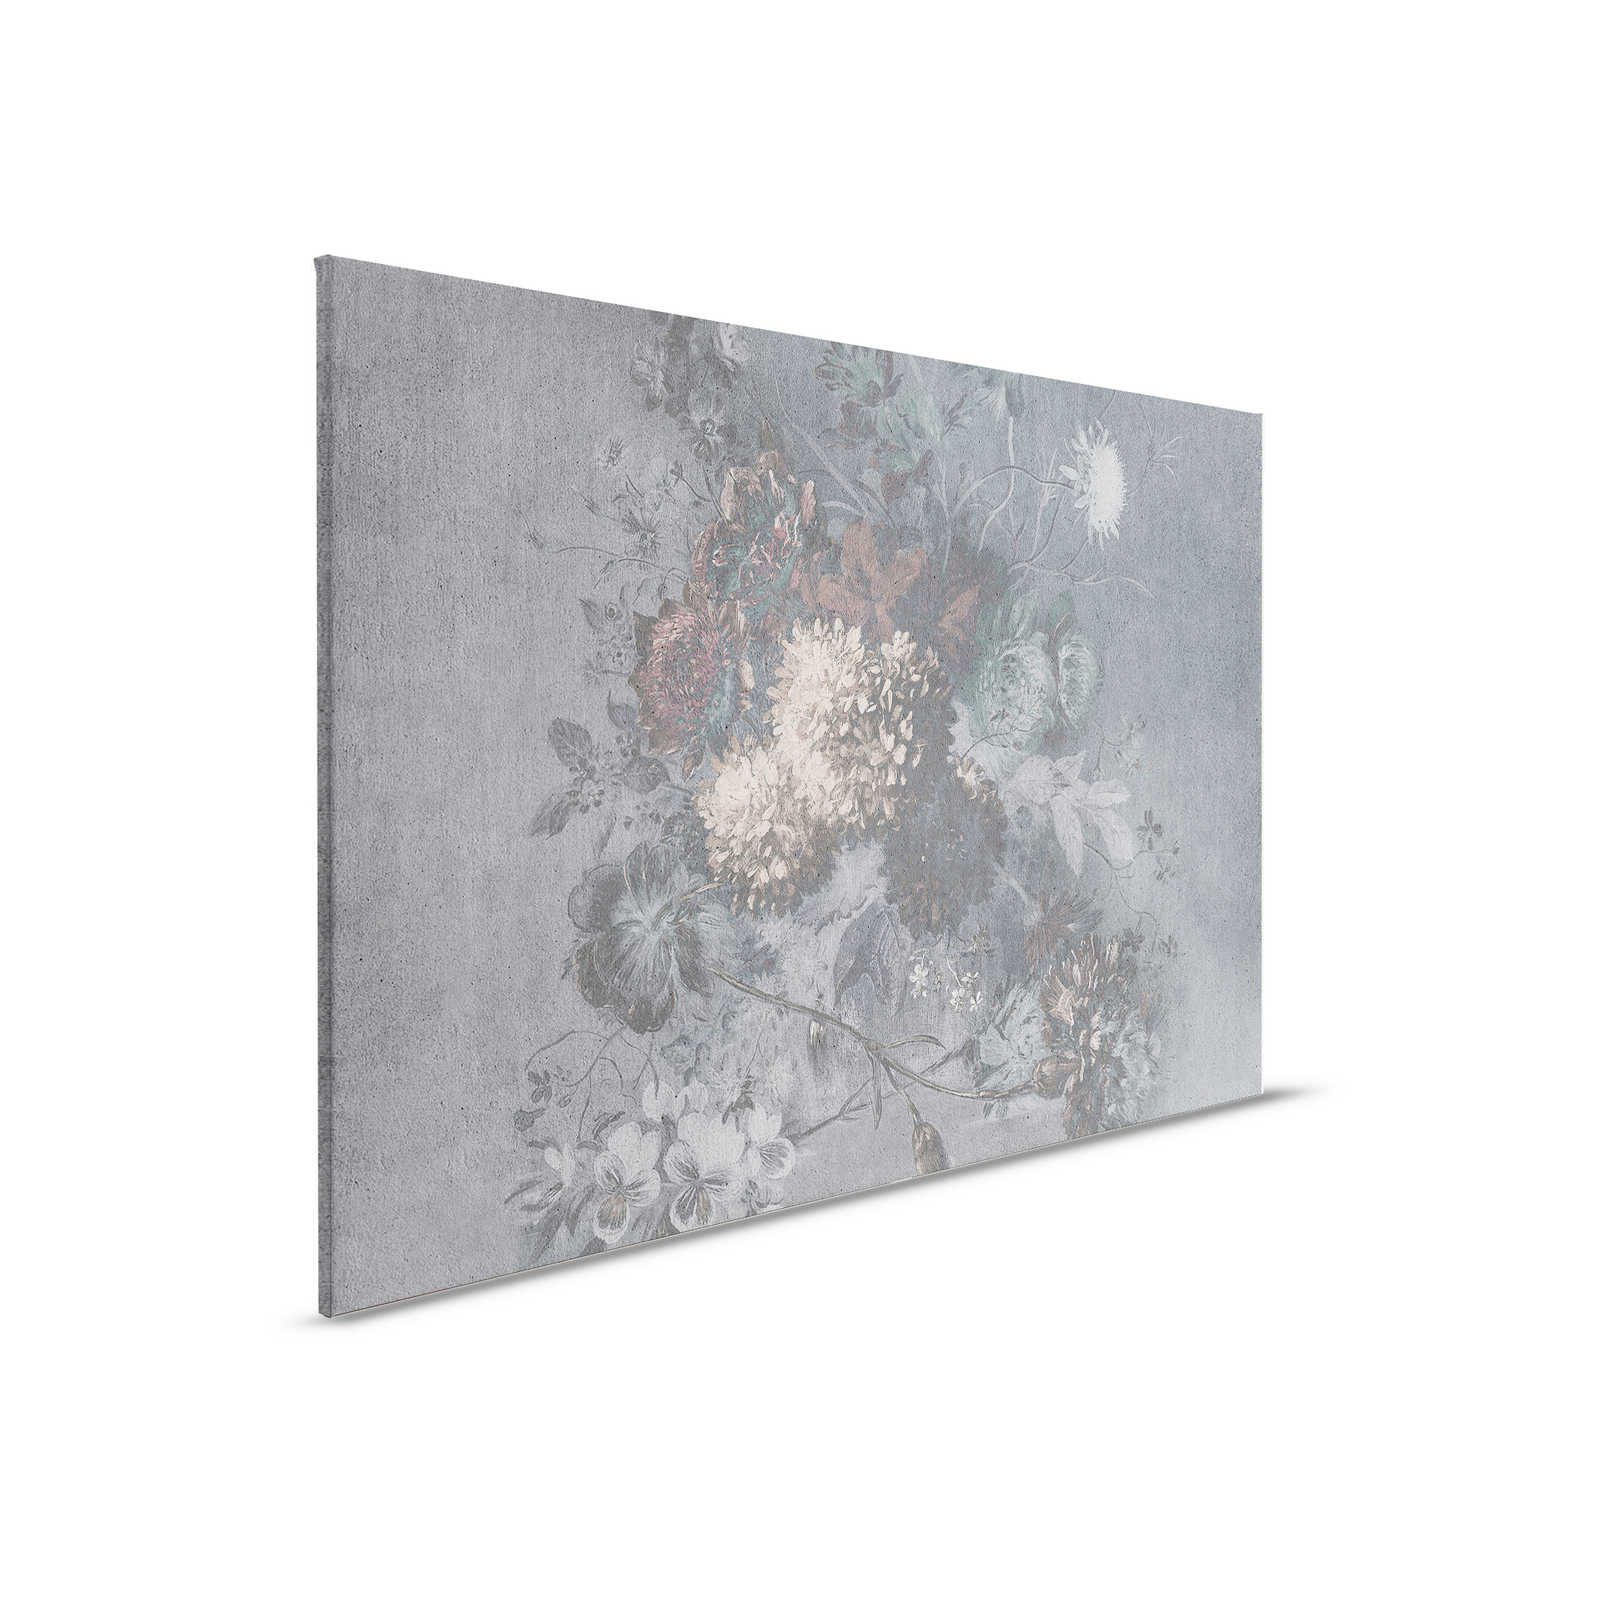 Cuadro en lienzo Ramo de flores estilo vintage | blanco, gris - 0,90 m x 0,60 m
